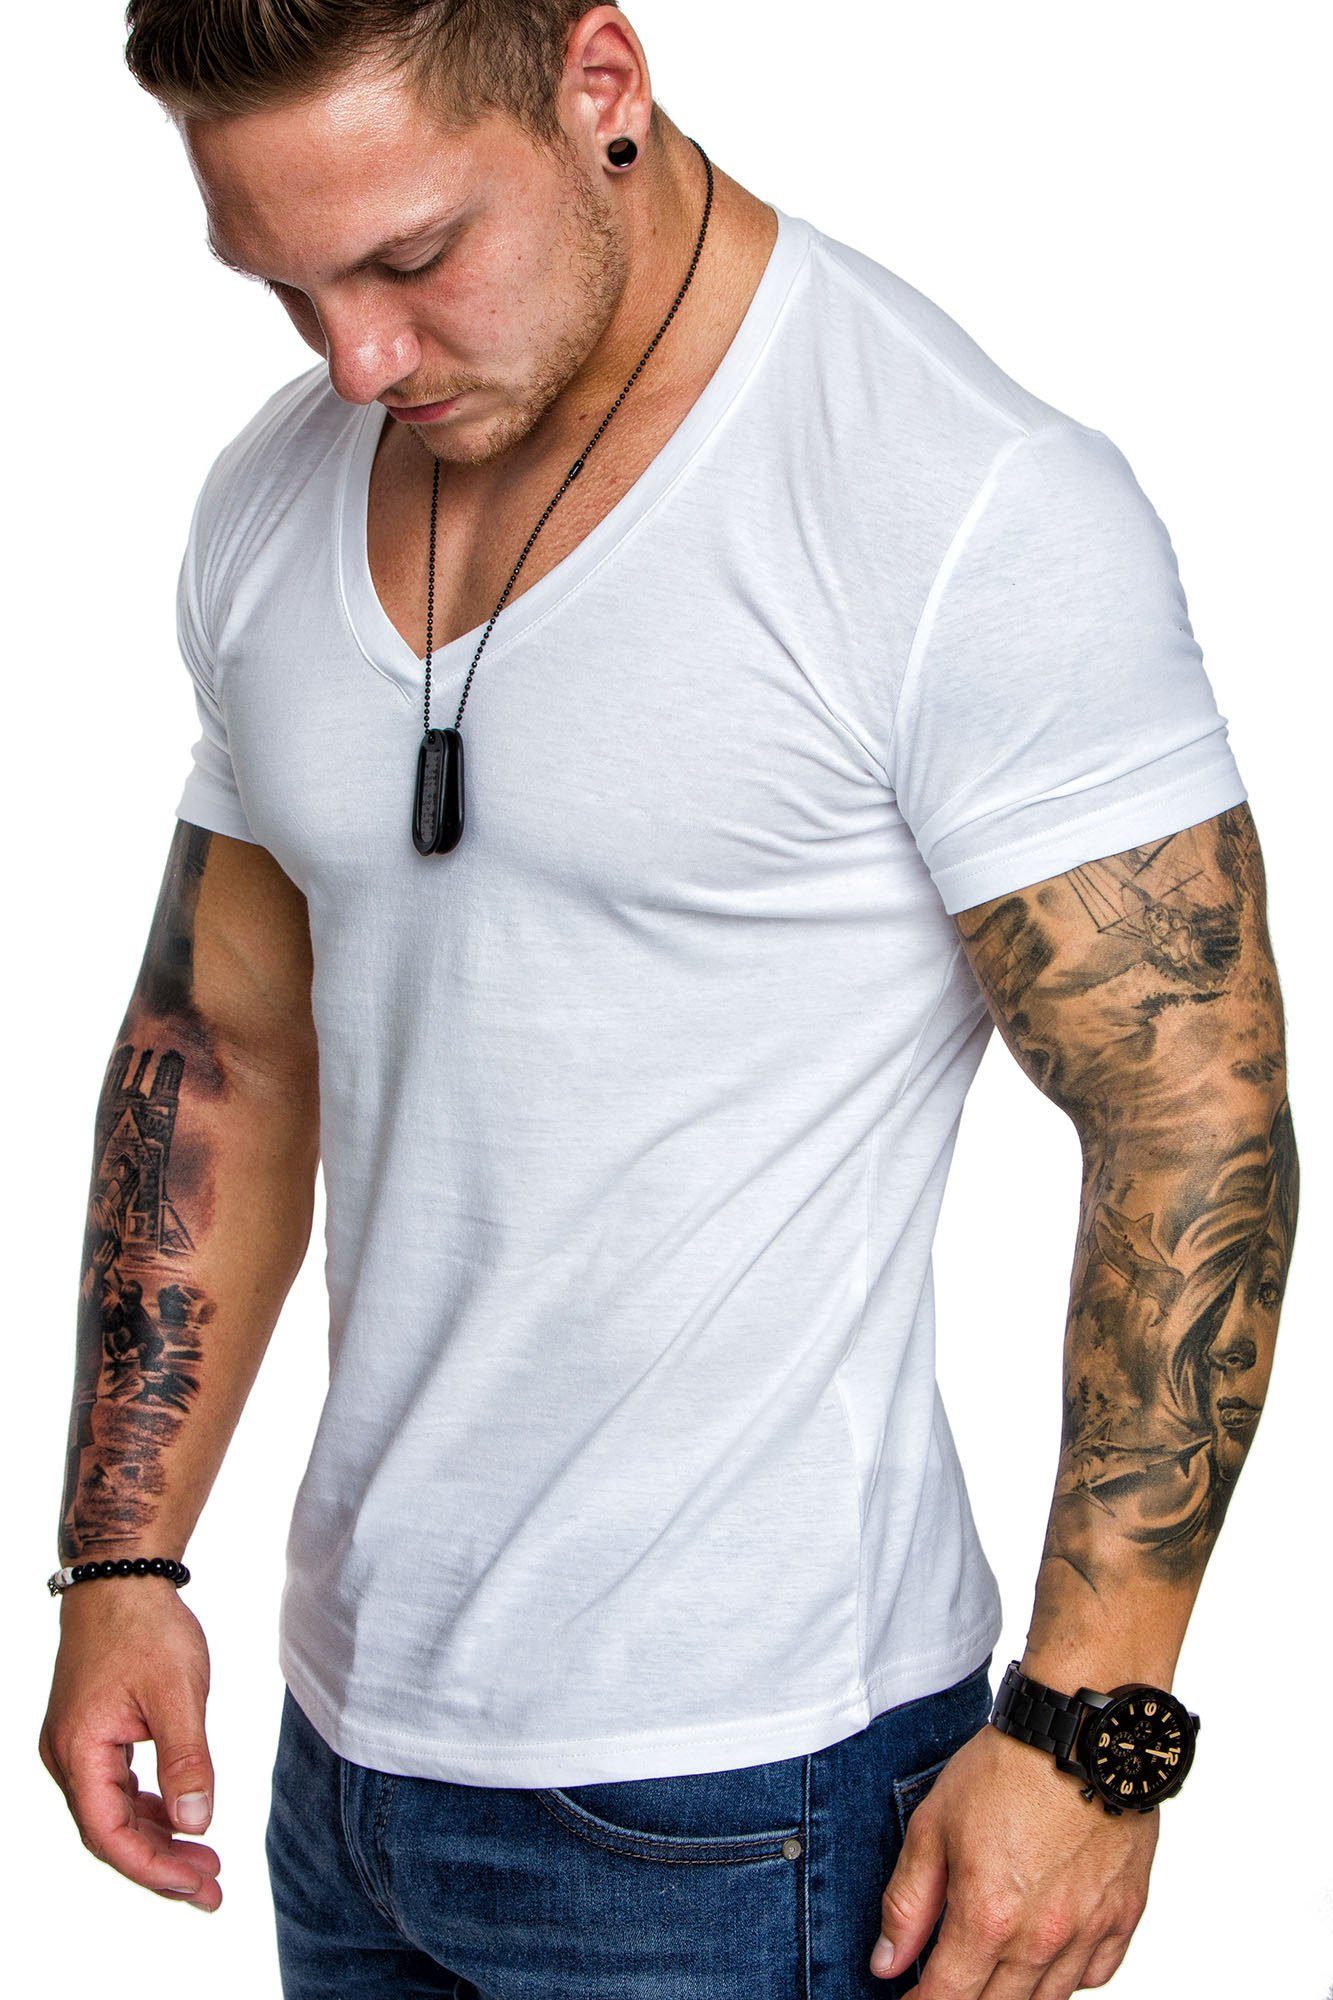 mit Herren V-Ausschnitt Basic Weiß Shirt Einfarbig Amaci&Sons T-Shirt V-Ausschnitt EUGENE Basic T-Shirt Vintage V-Neck